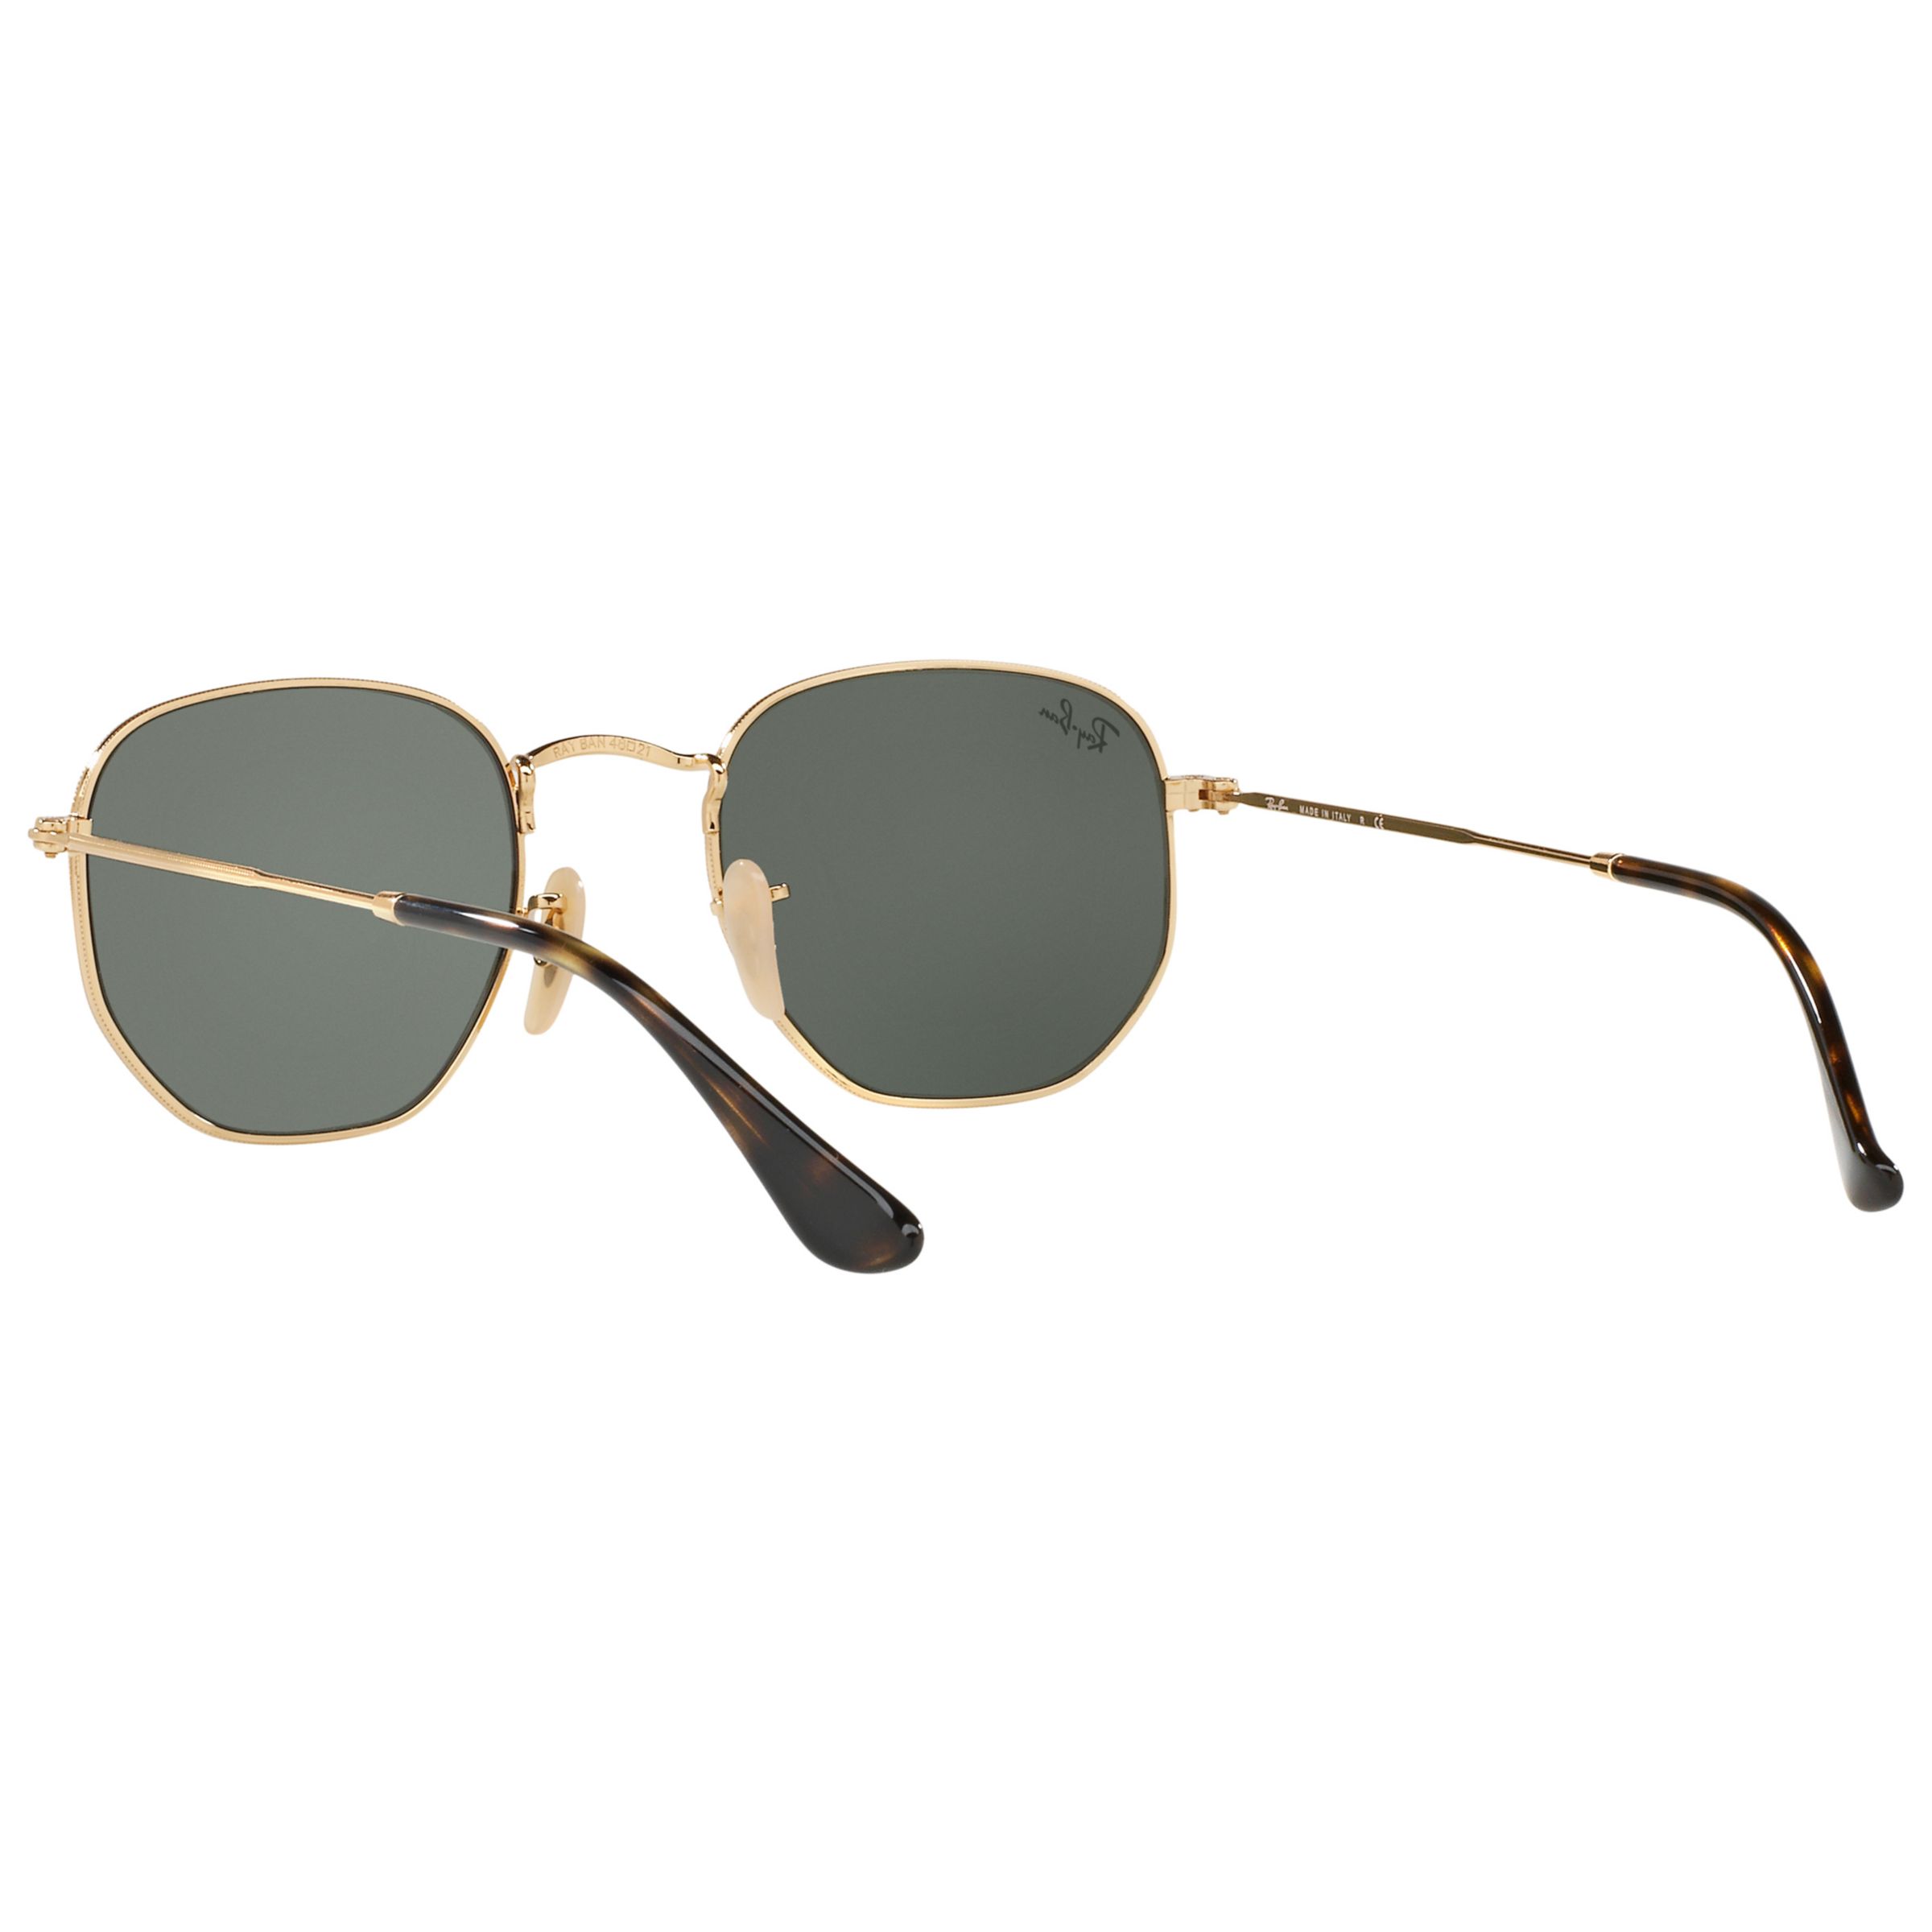 Ray-Ban RB3548 Hexagonal Flat Lens Sunglasses, Gold/Dark Green